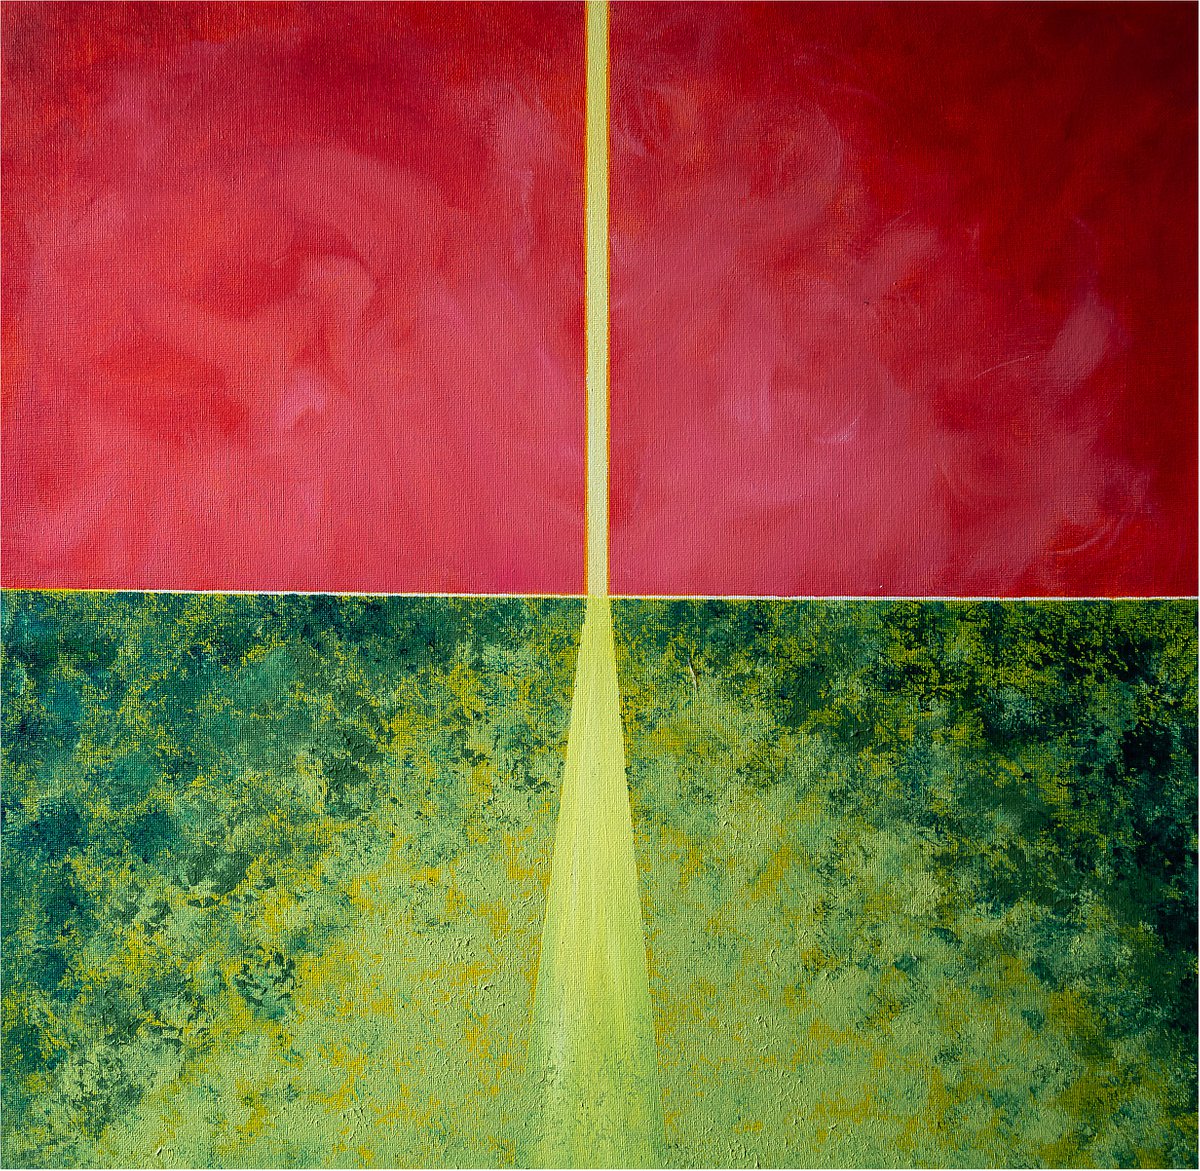 Red and Green Painting by Mariusz Czajkowski